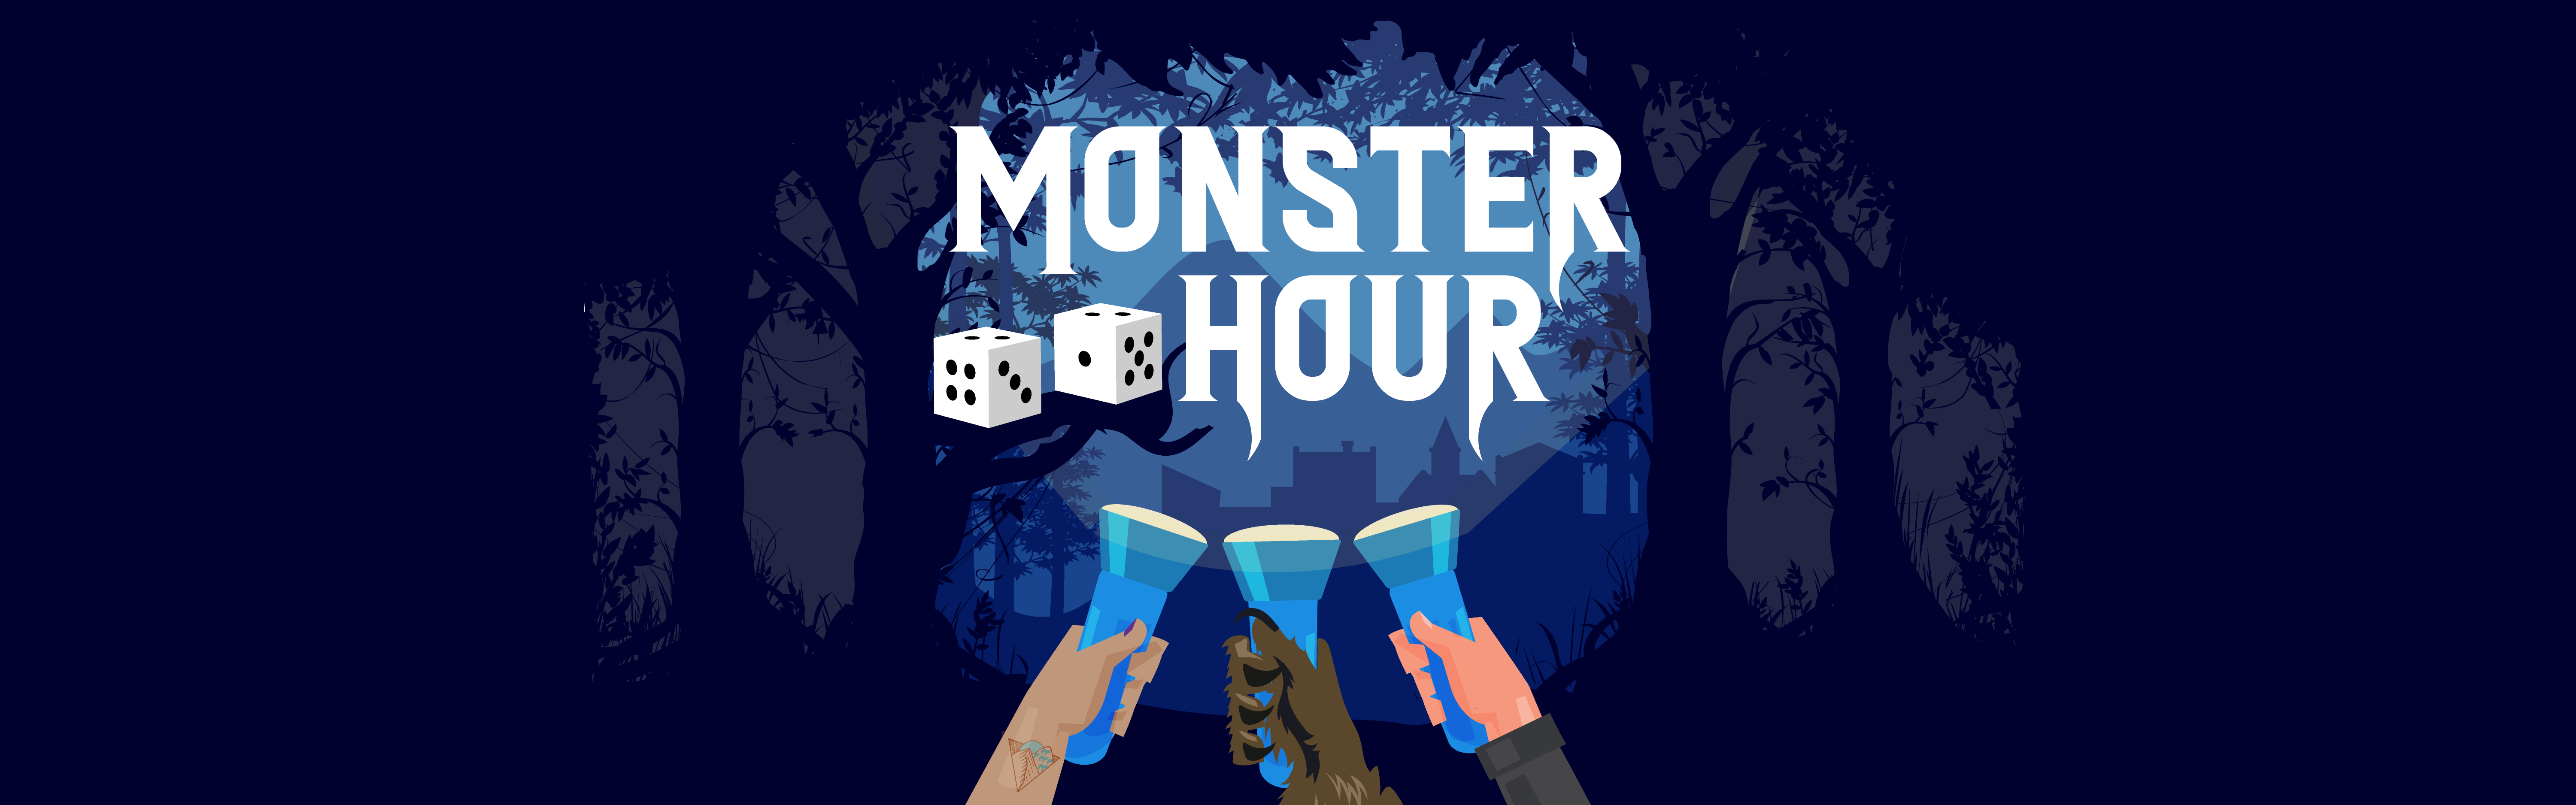 Monster Hour header image 1